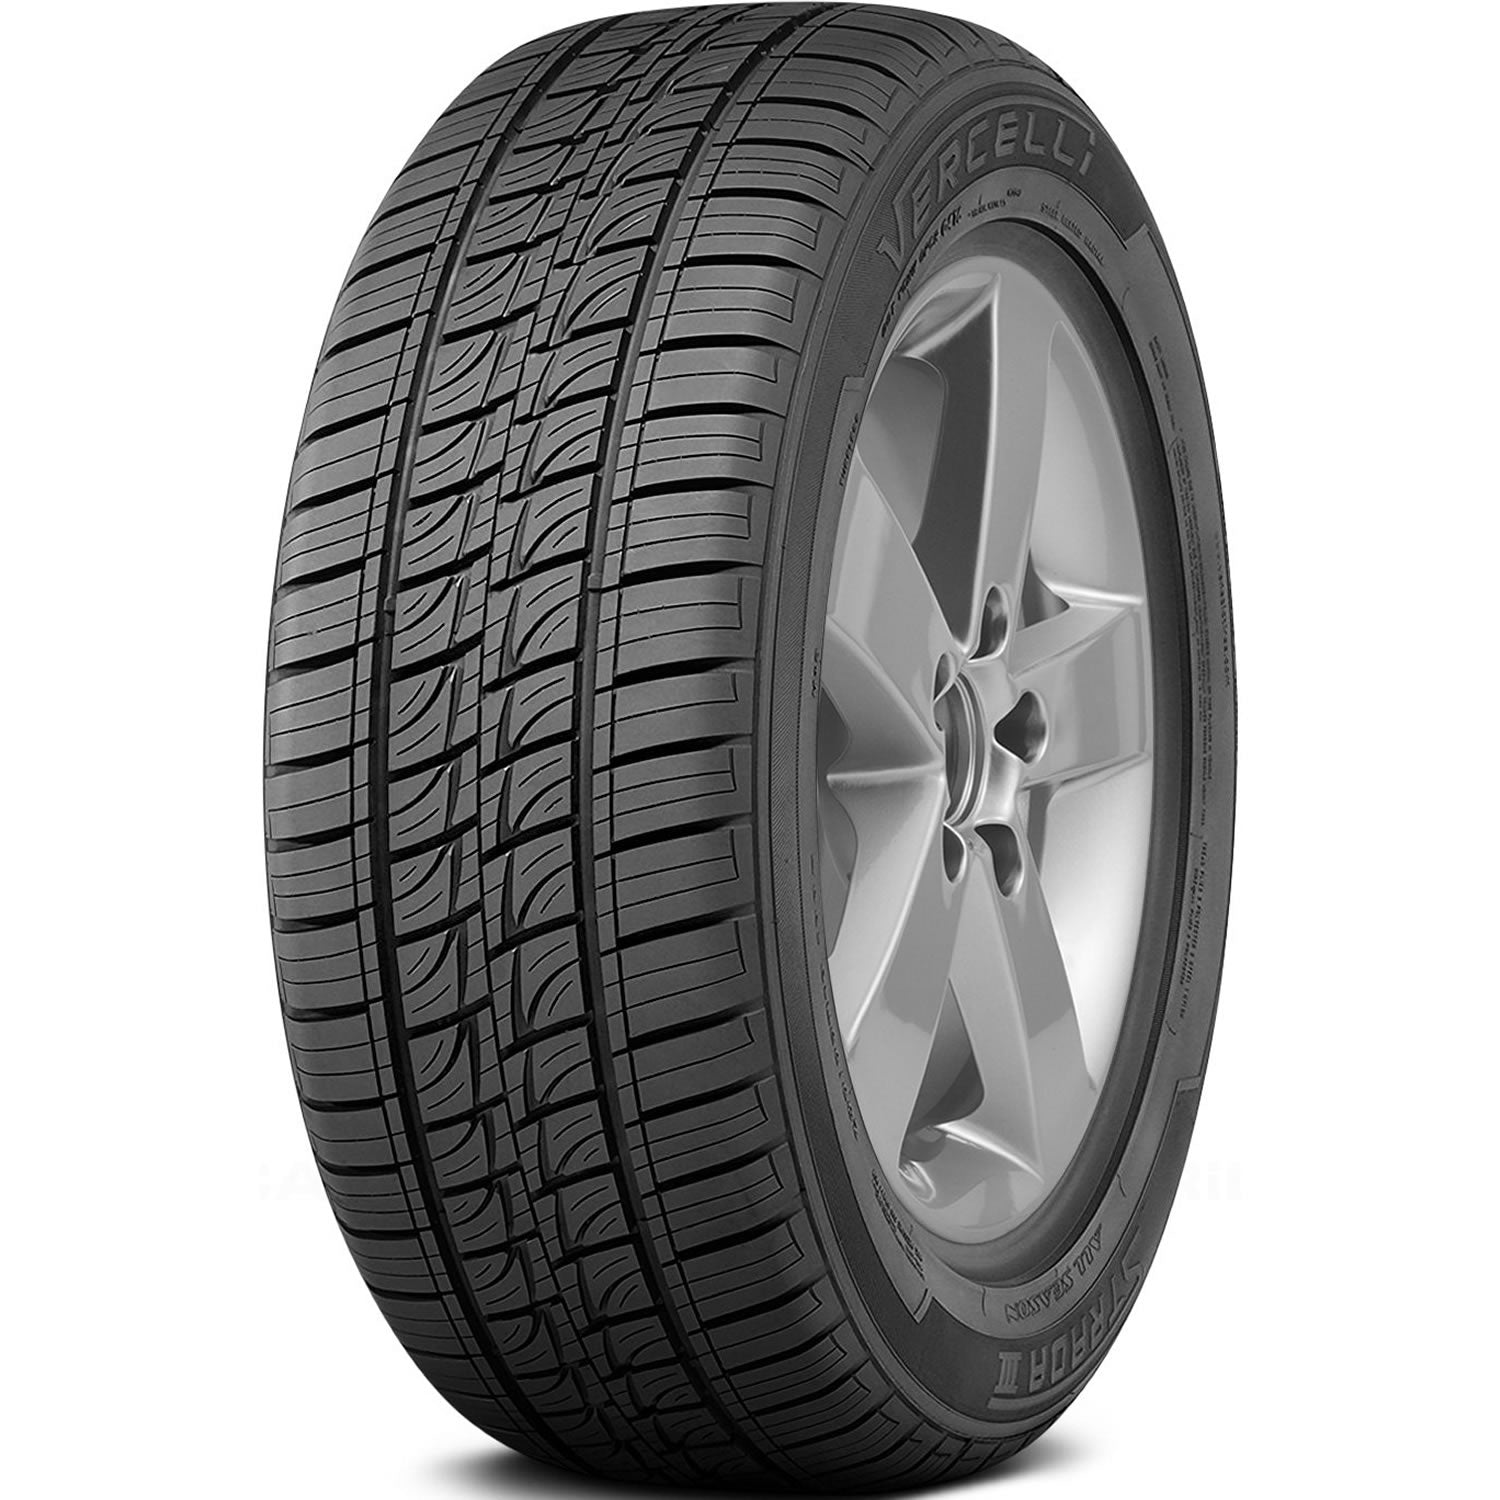 VERCELLI STRADA III 235/60R17 (28.1X9.5R 17) Tires